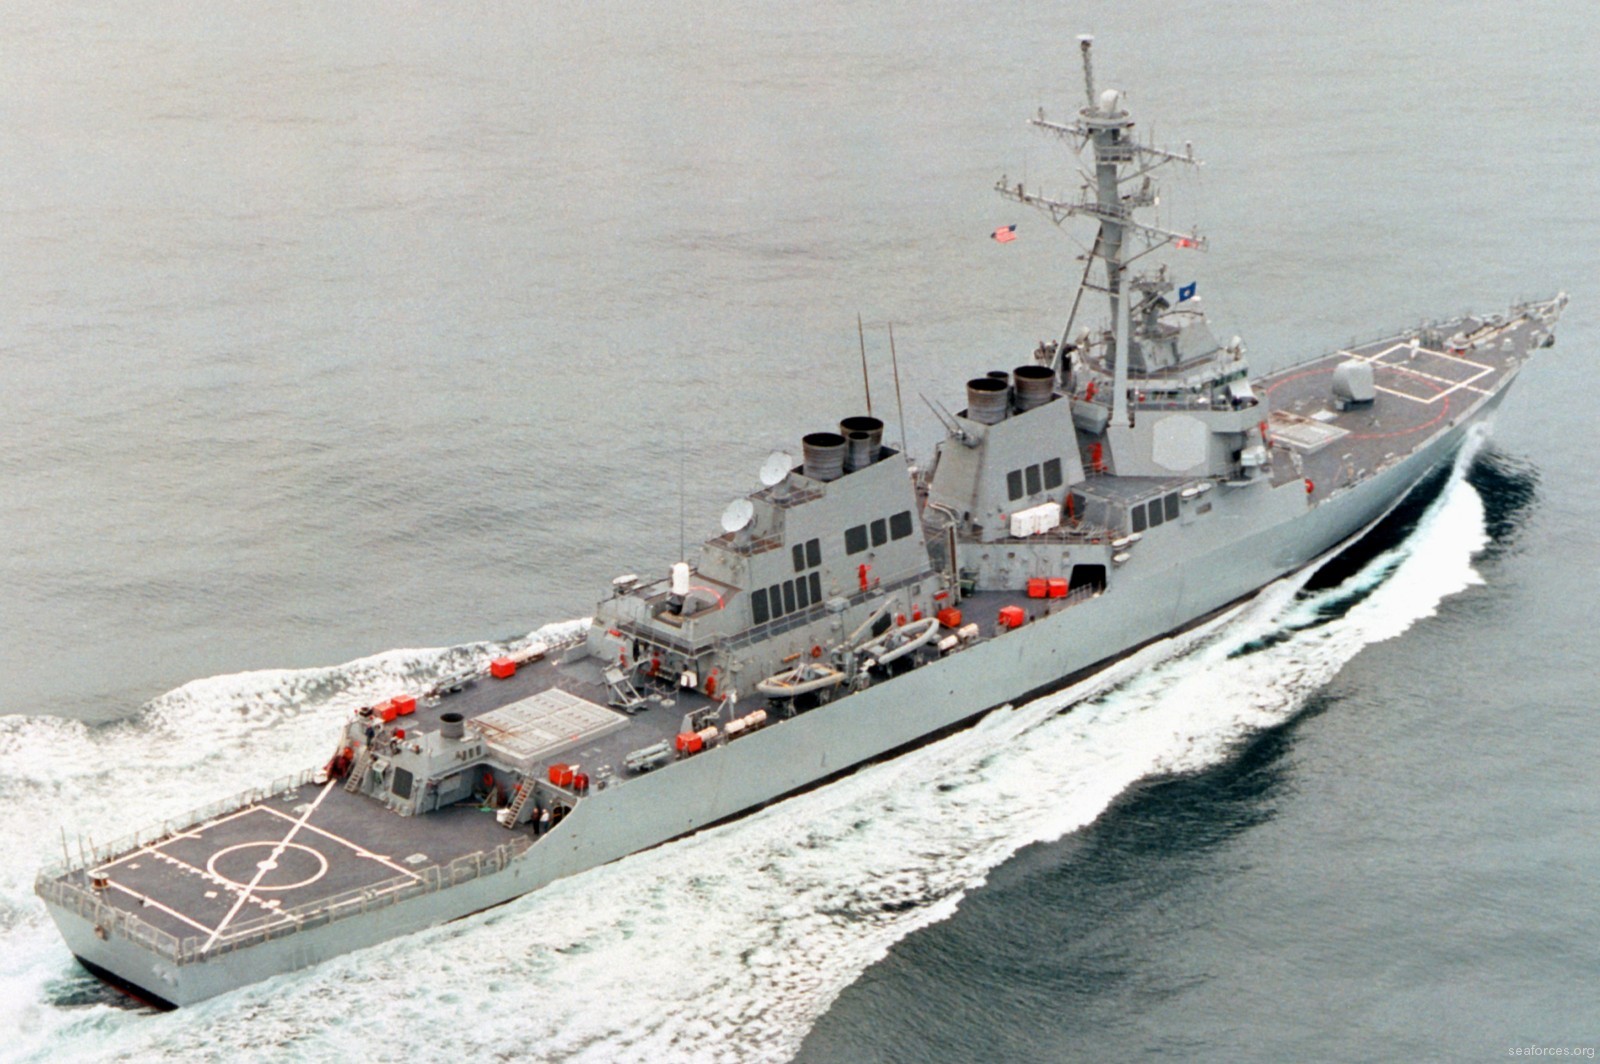 ddg-62 uss fitzgerald guided missile destroyer 1995 117 sea trials bath iron works maine